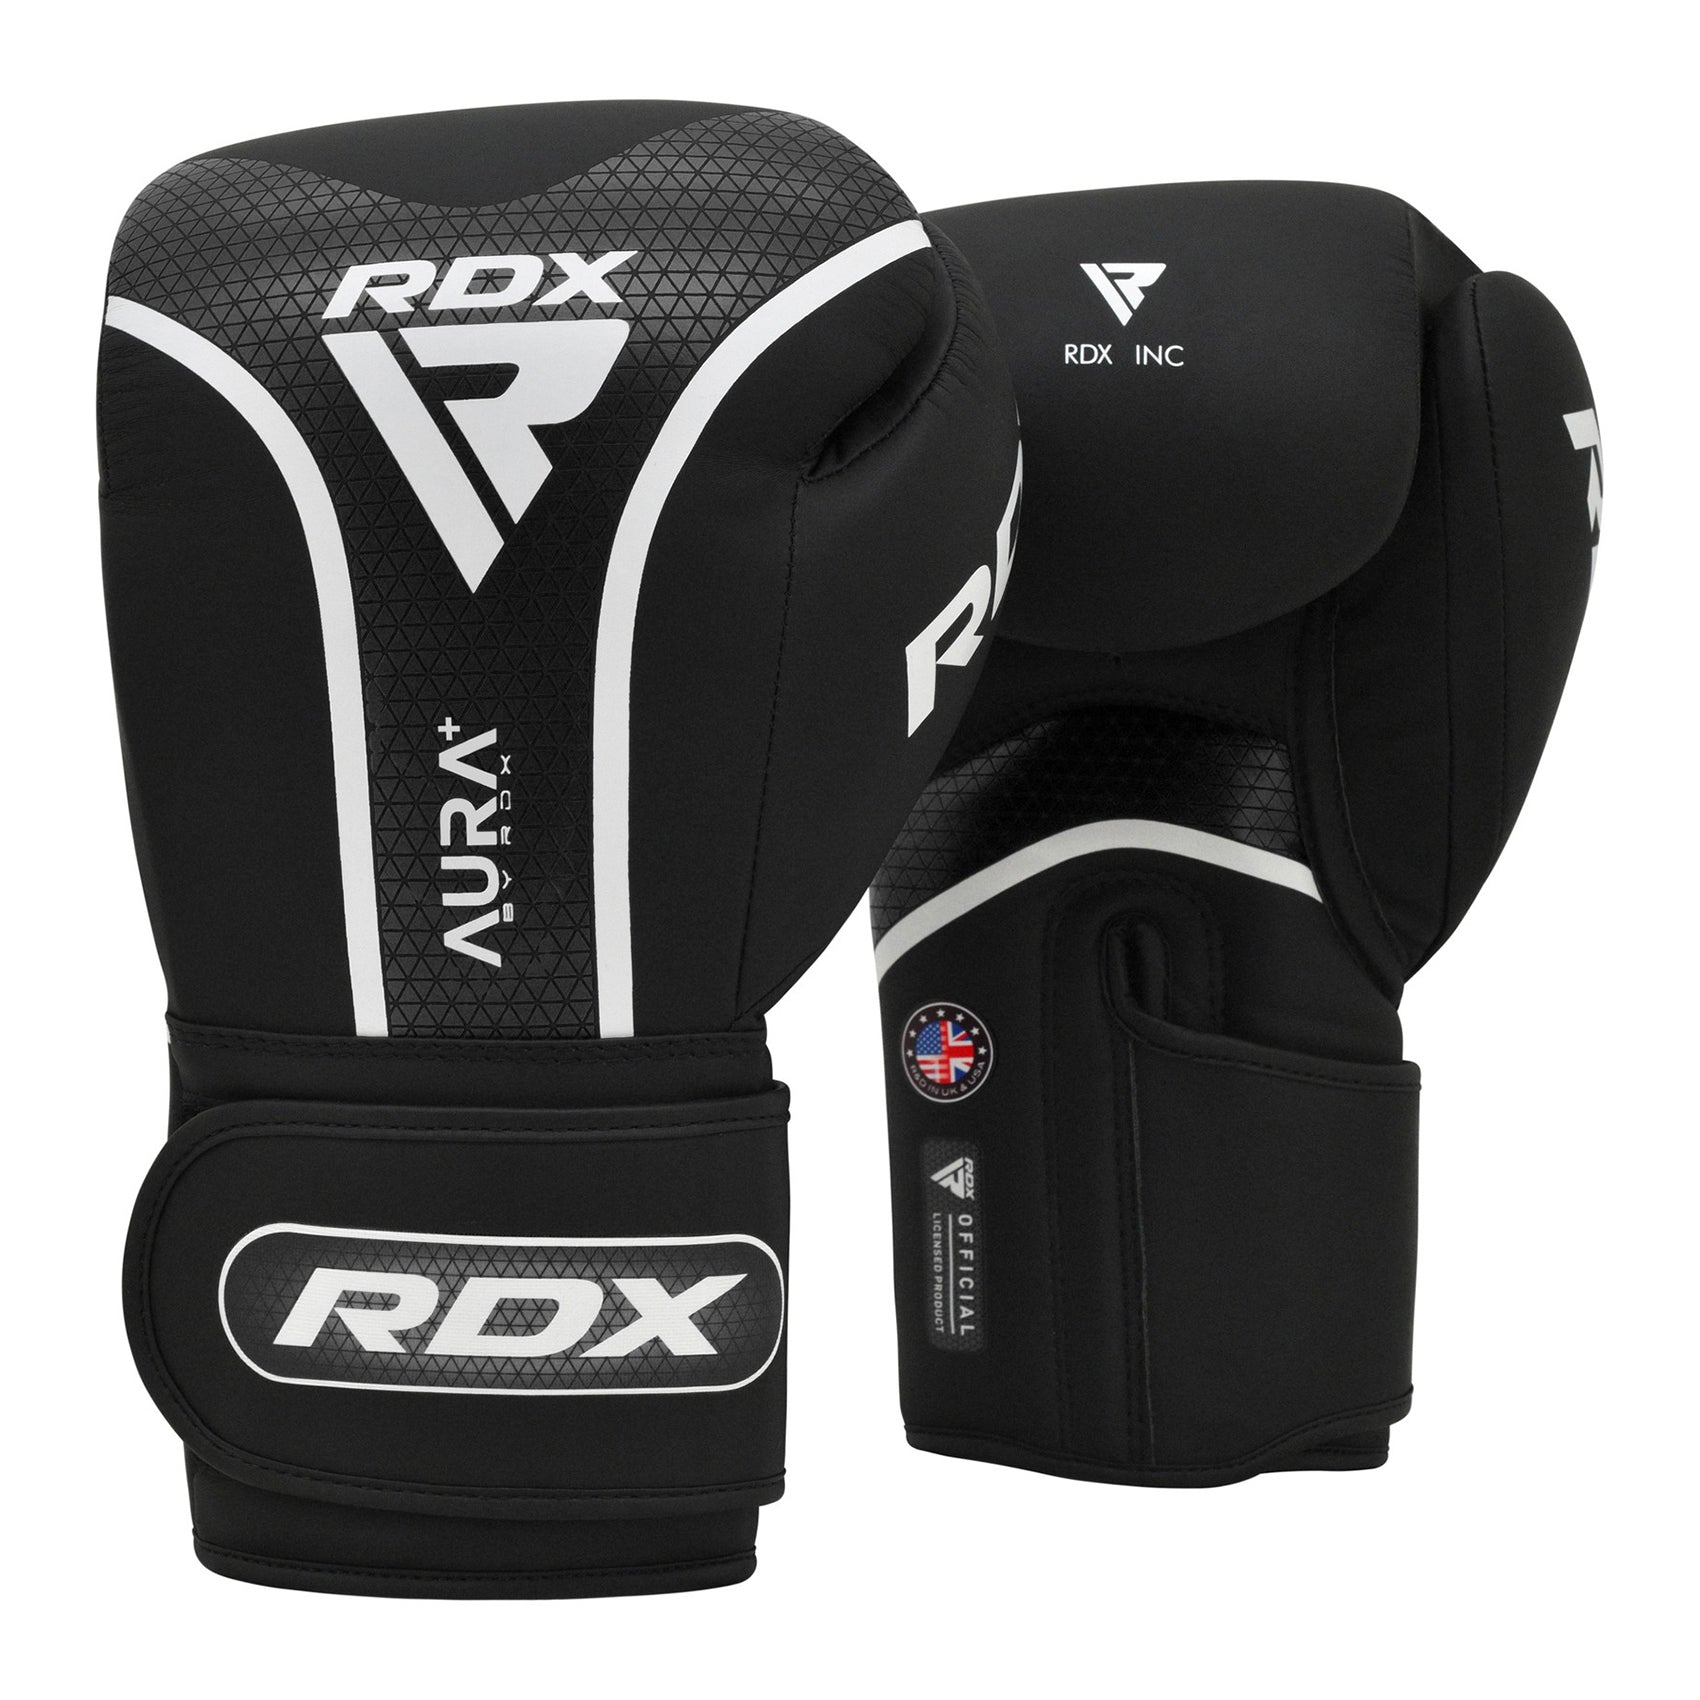 RDX T17 Aura Nova Tech Boxing Sparring Gloves - Matte Black - 12oz - Shock Absorbing Foam, Moisture Wicking for Heavy Punching Bag Training, Kickboxing, Muay Thai, Sparring - Pro-Distributing